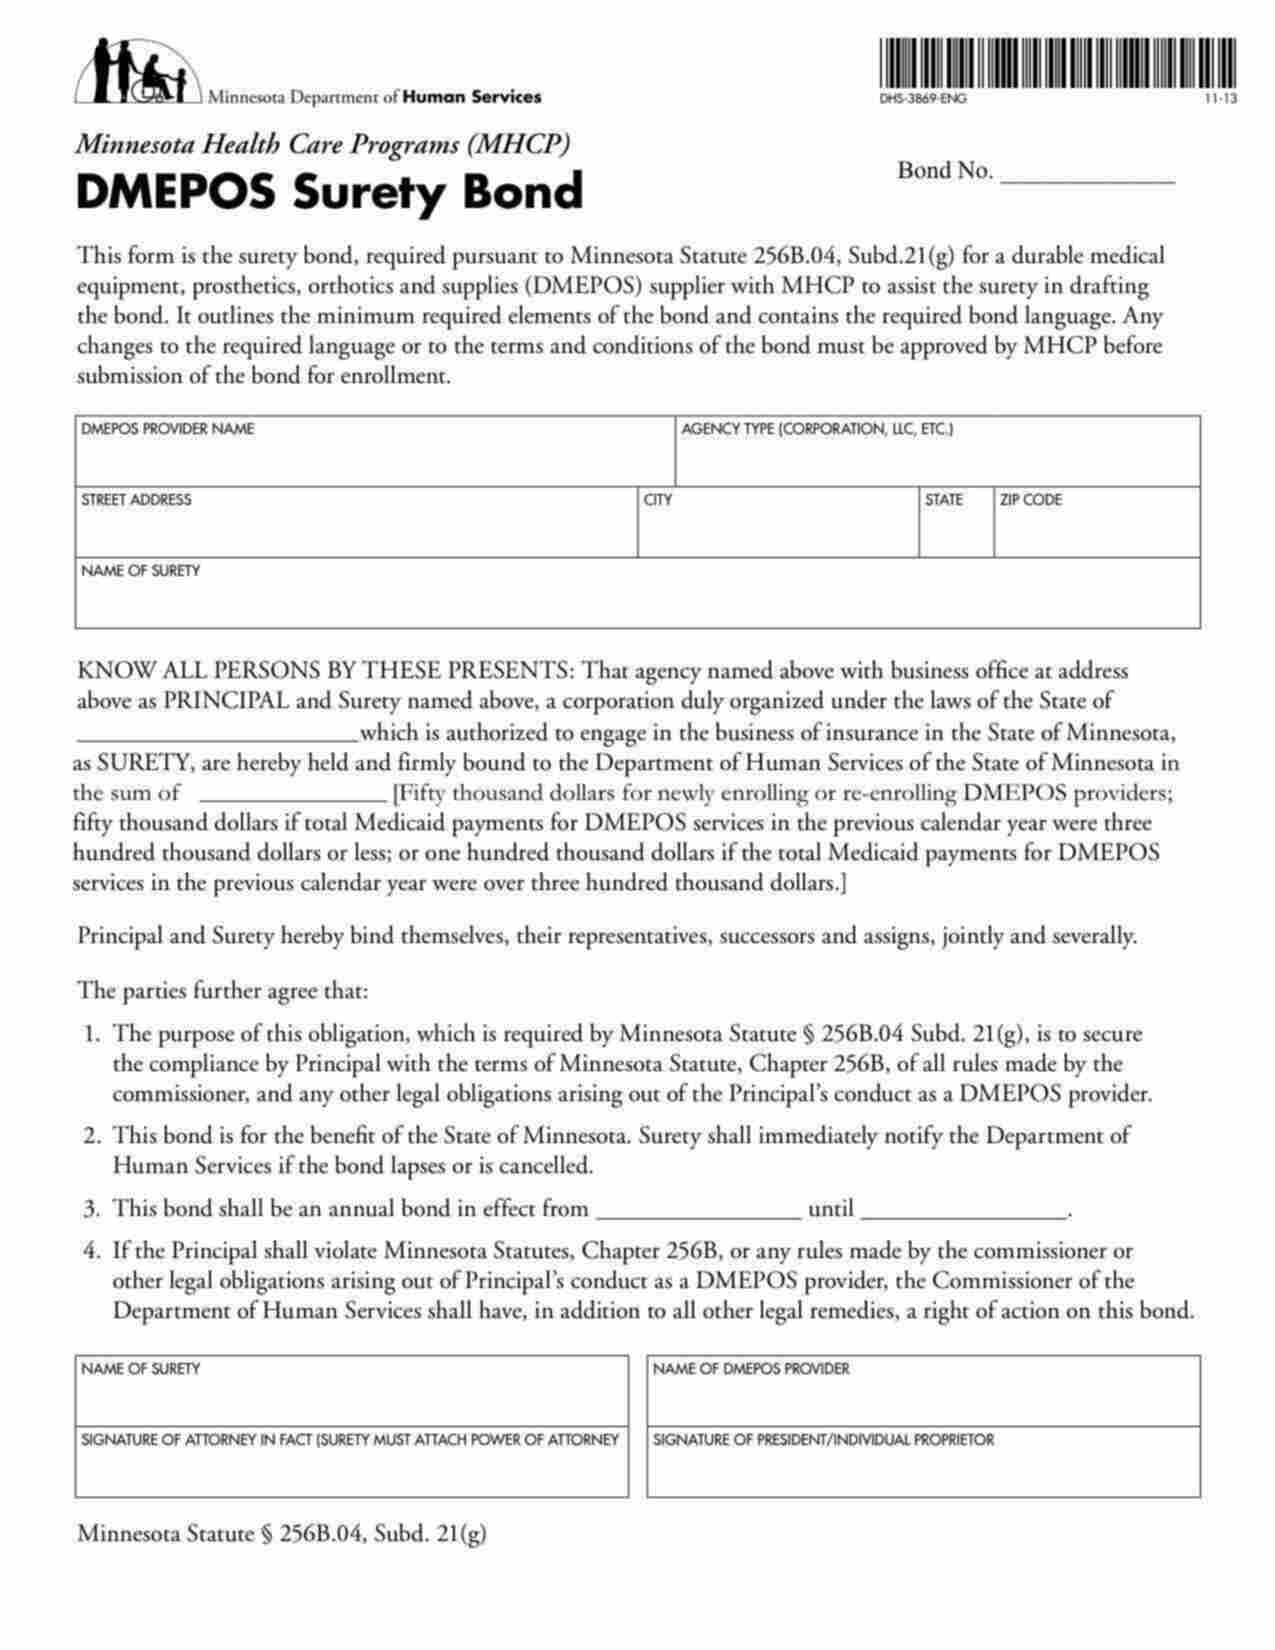 Minnesota Medicaid DMEPOS Supplier Bond Form